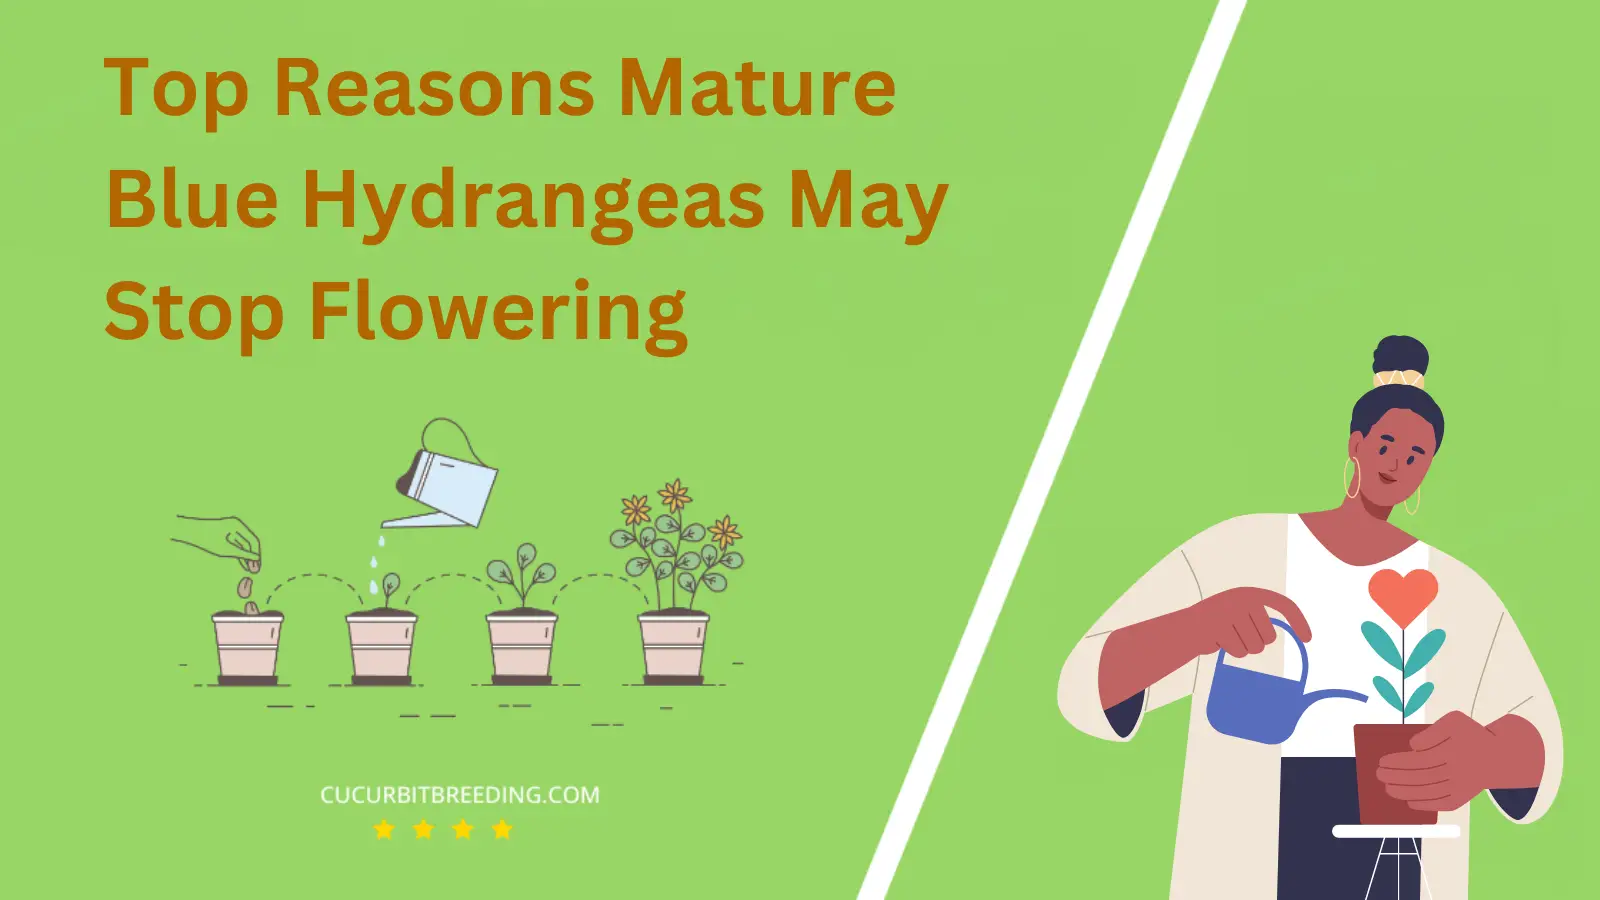 Top Reasons Mature Blue Hydrangeas May Stop Flowering